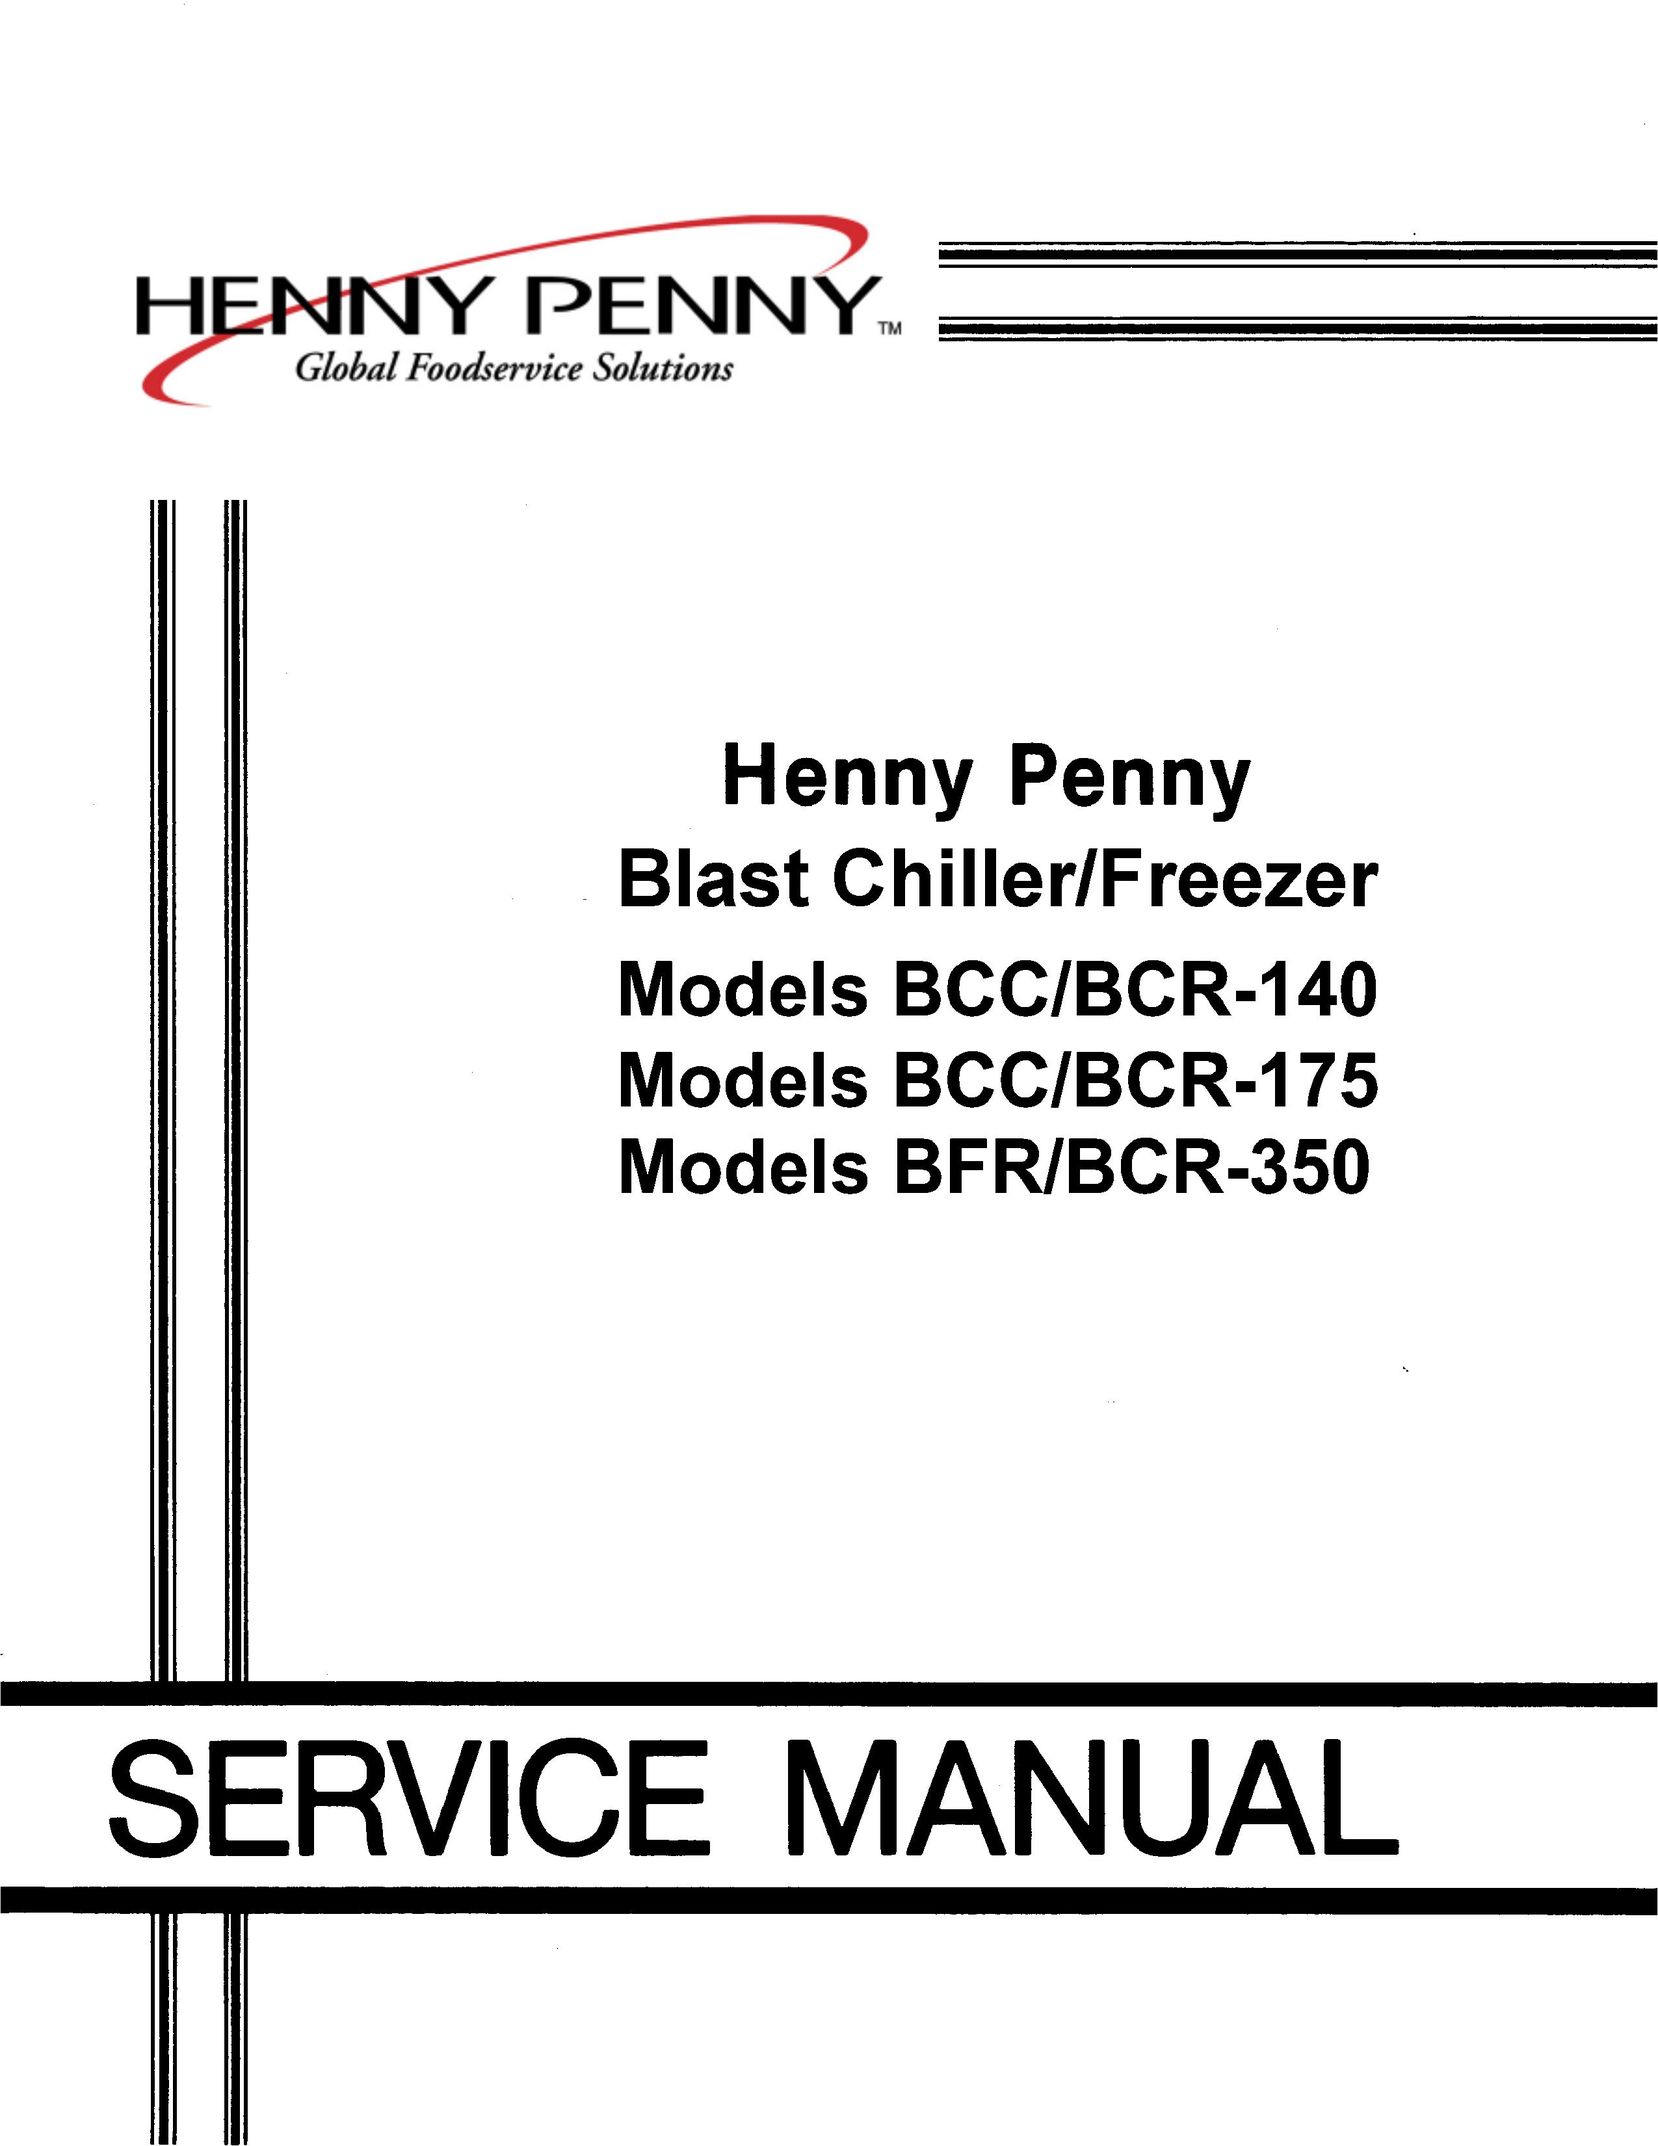 Henny Penny BCC/BCR-175 Freezer User Manual